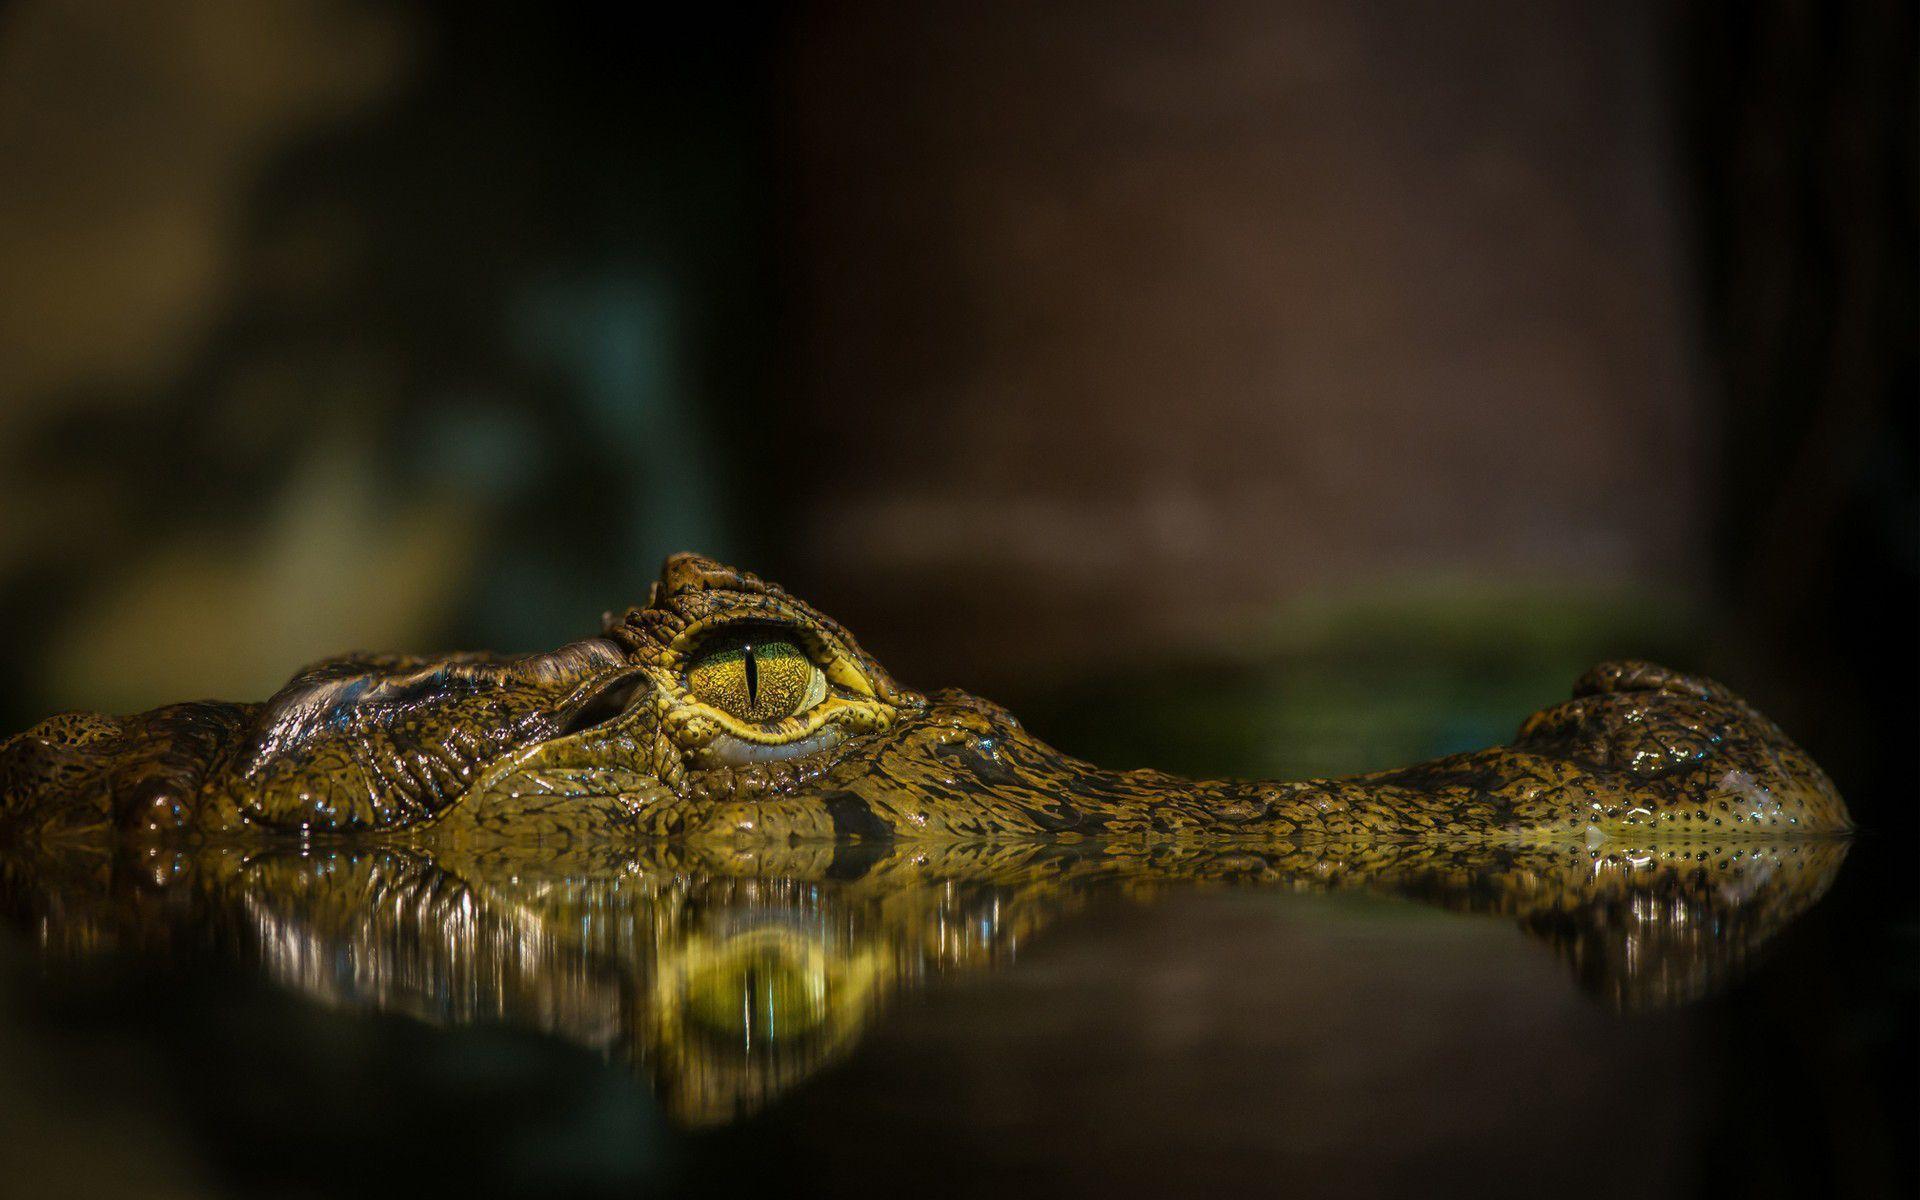 Crocodile soaked in water wallpaper photo  Free Animal Image on Unsplash